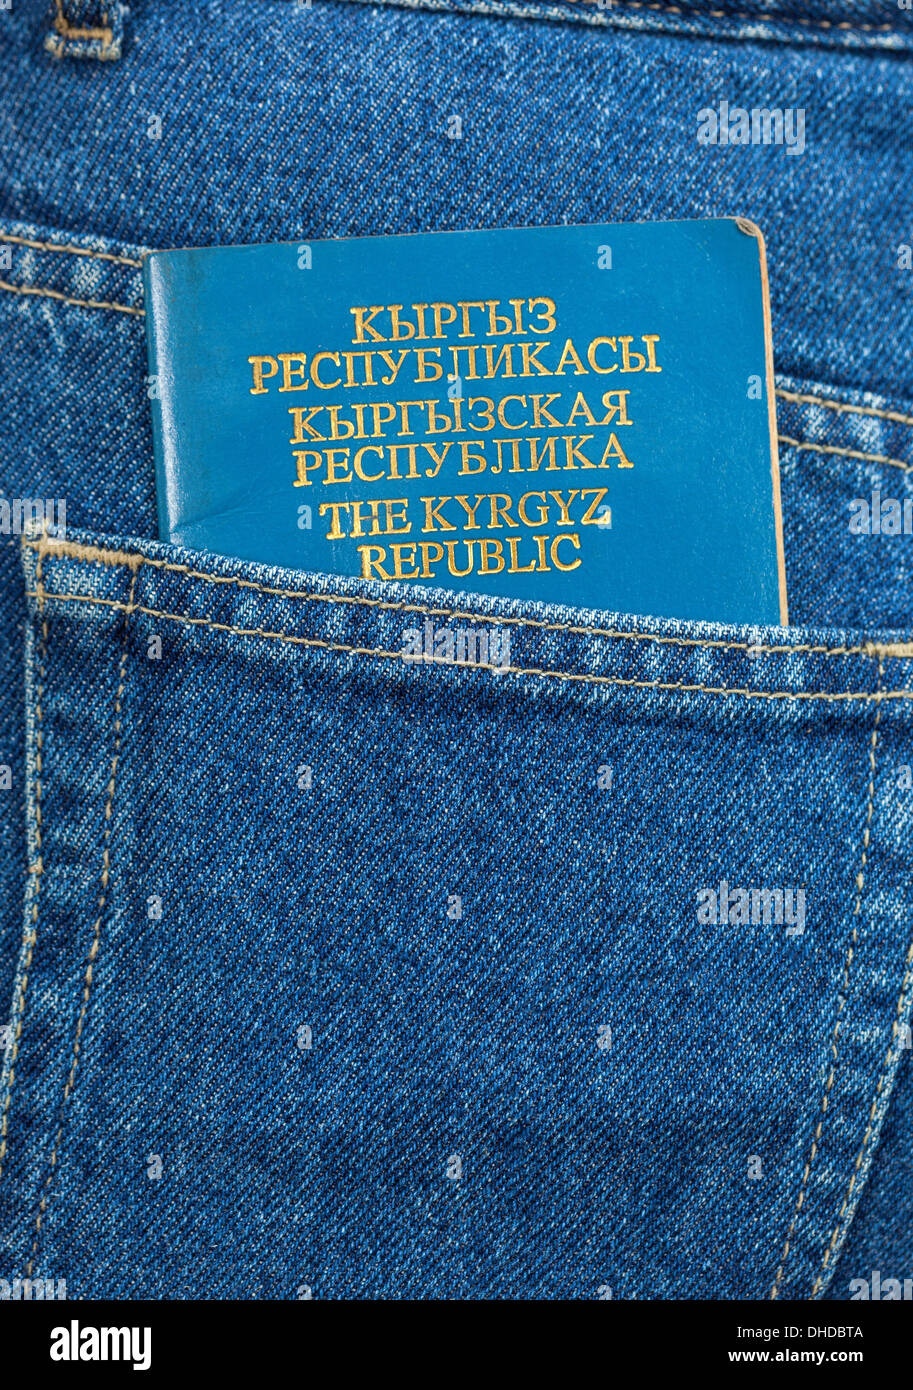 Kyrgyz Republic passport in the back jeans pocket Stock Photo